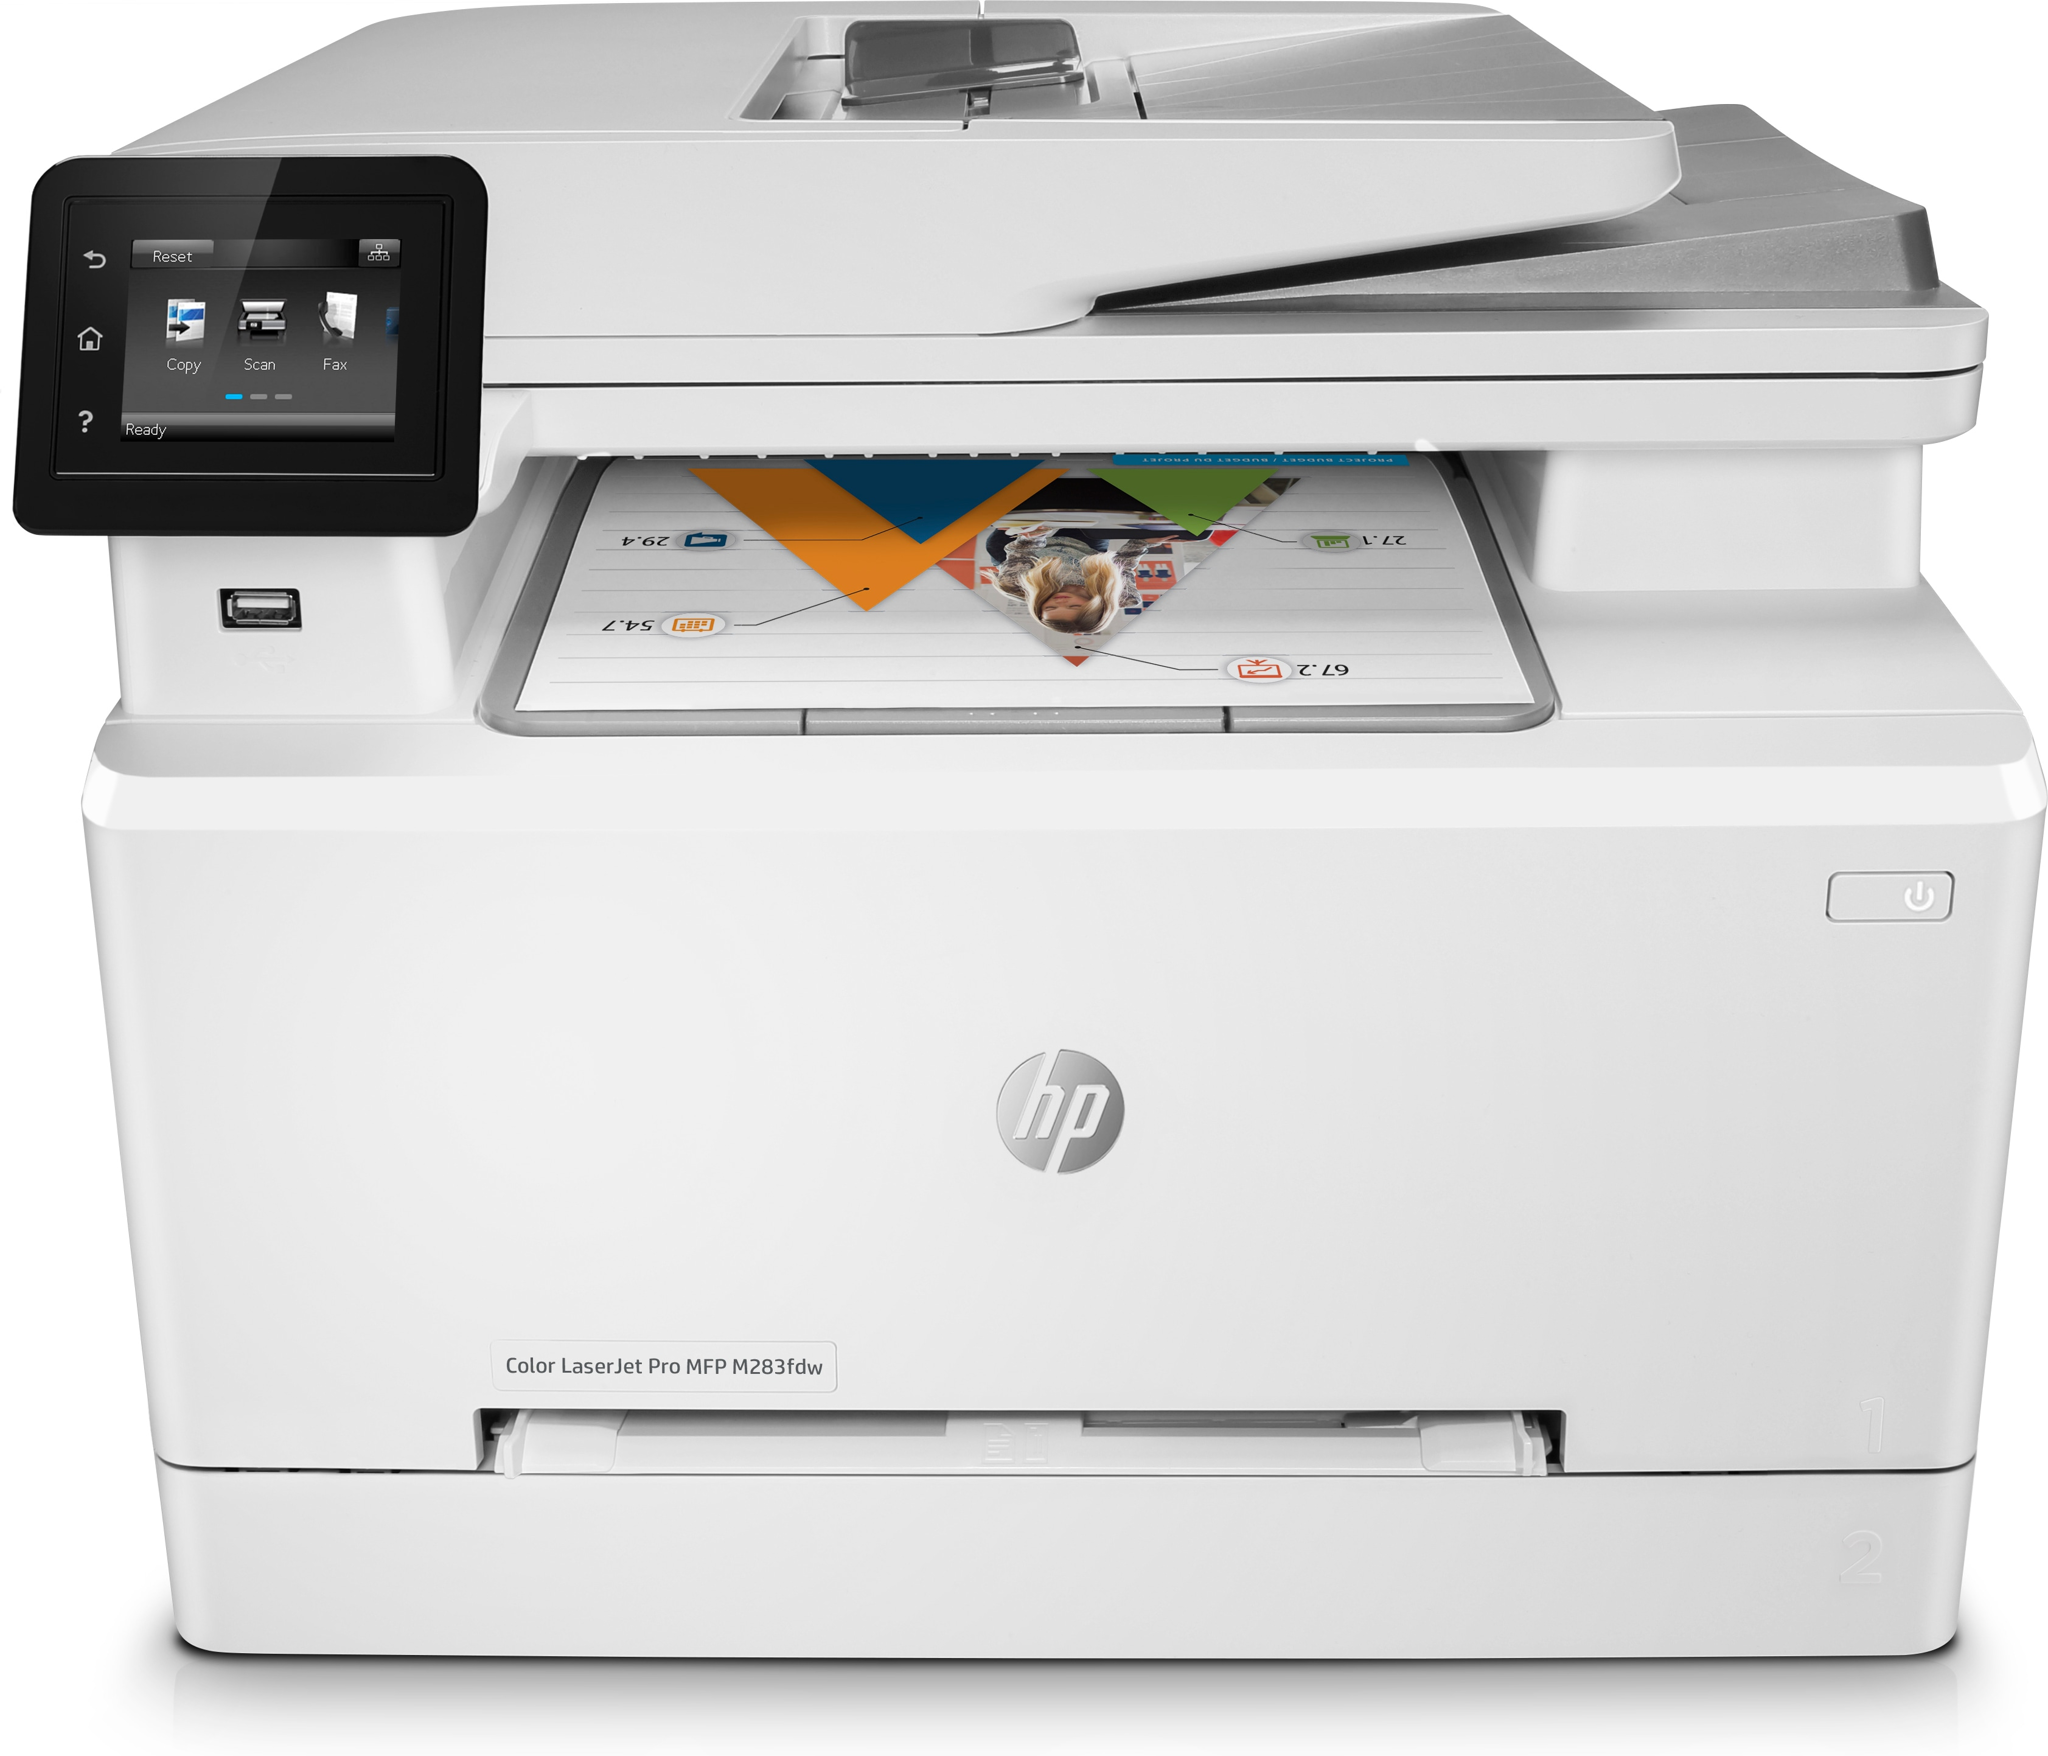 Bild von HP Color Laserjet Pro Mfp M283Fdw Print Copy Scan - Drucker - Laser/LED-Druck